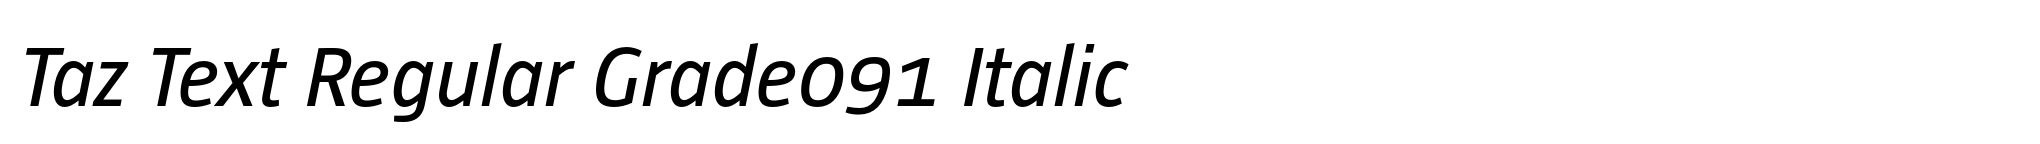 Taz Text Regular Grade091 Italic image